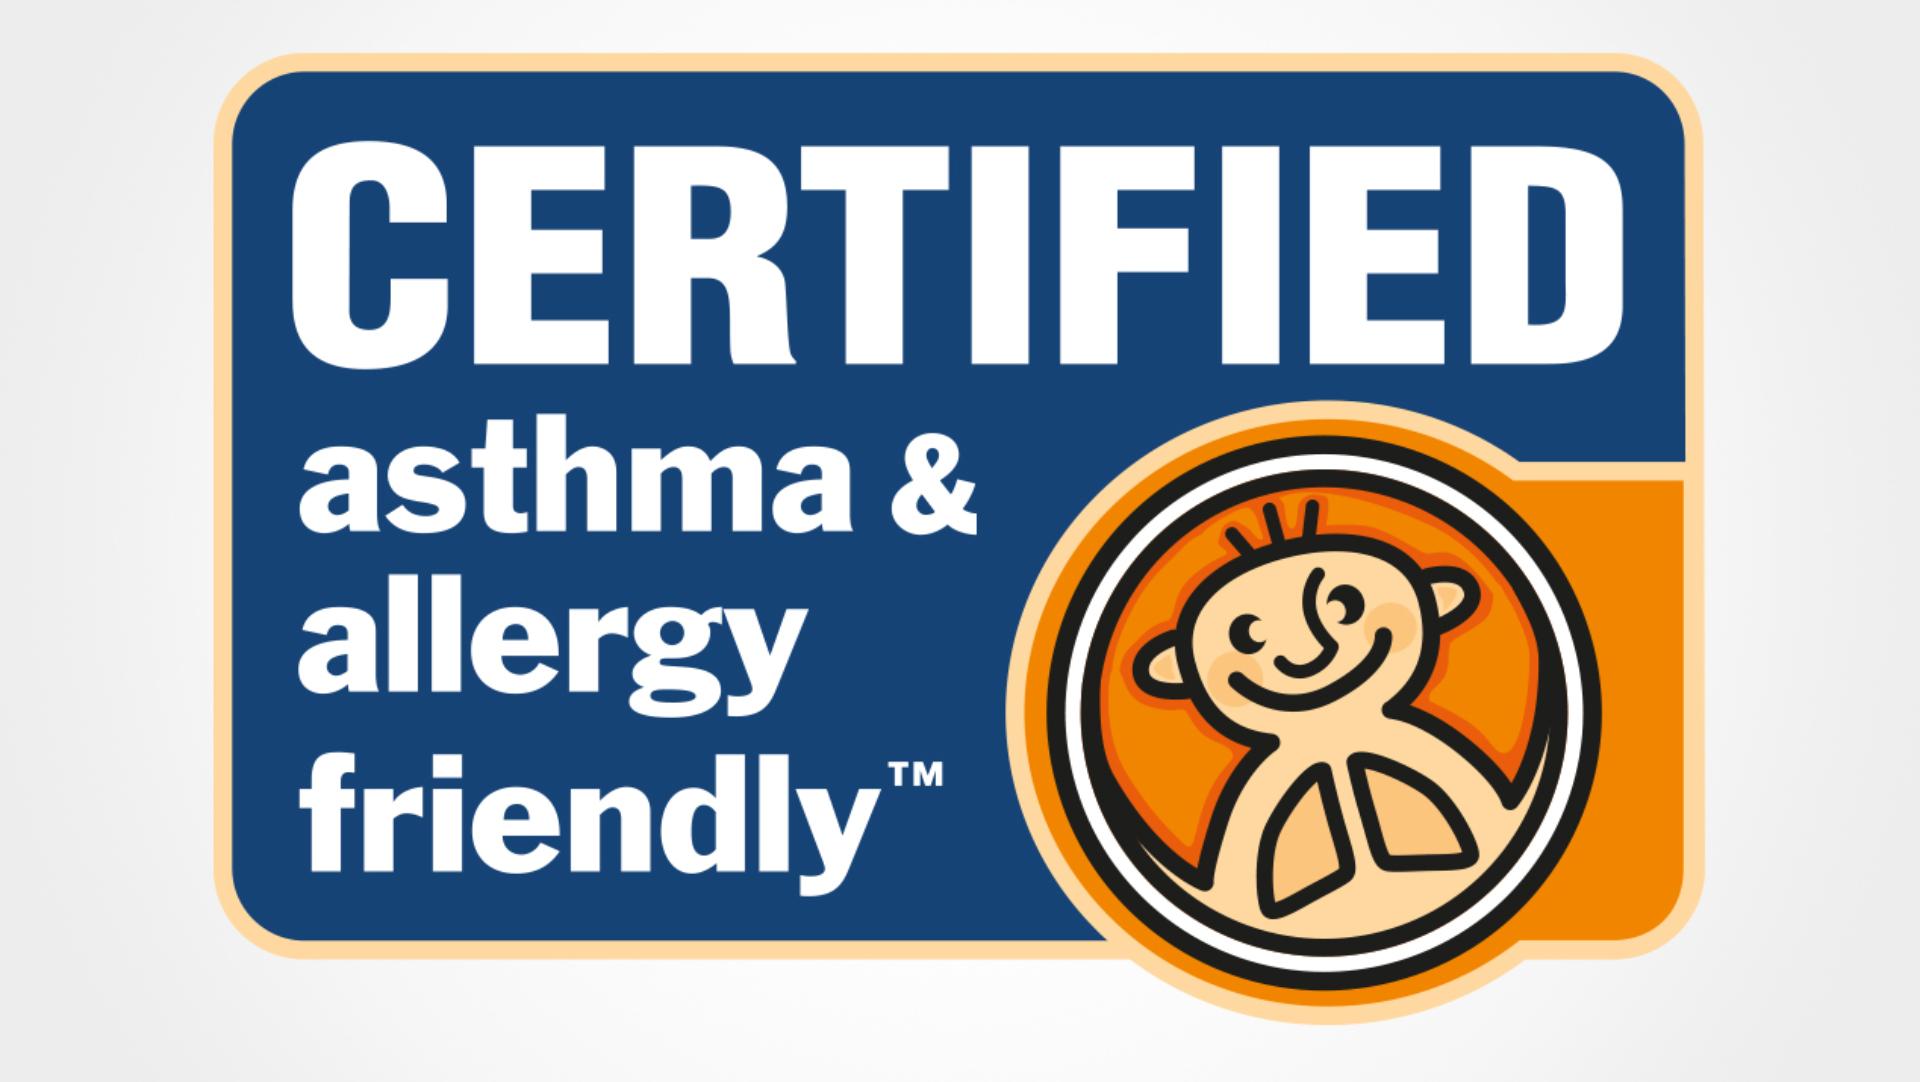 Certified Asthma & Allergy friendly™